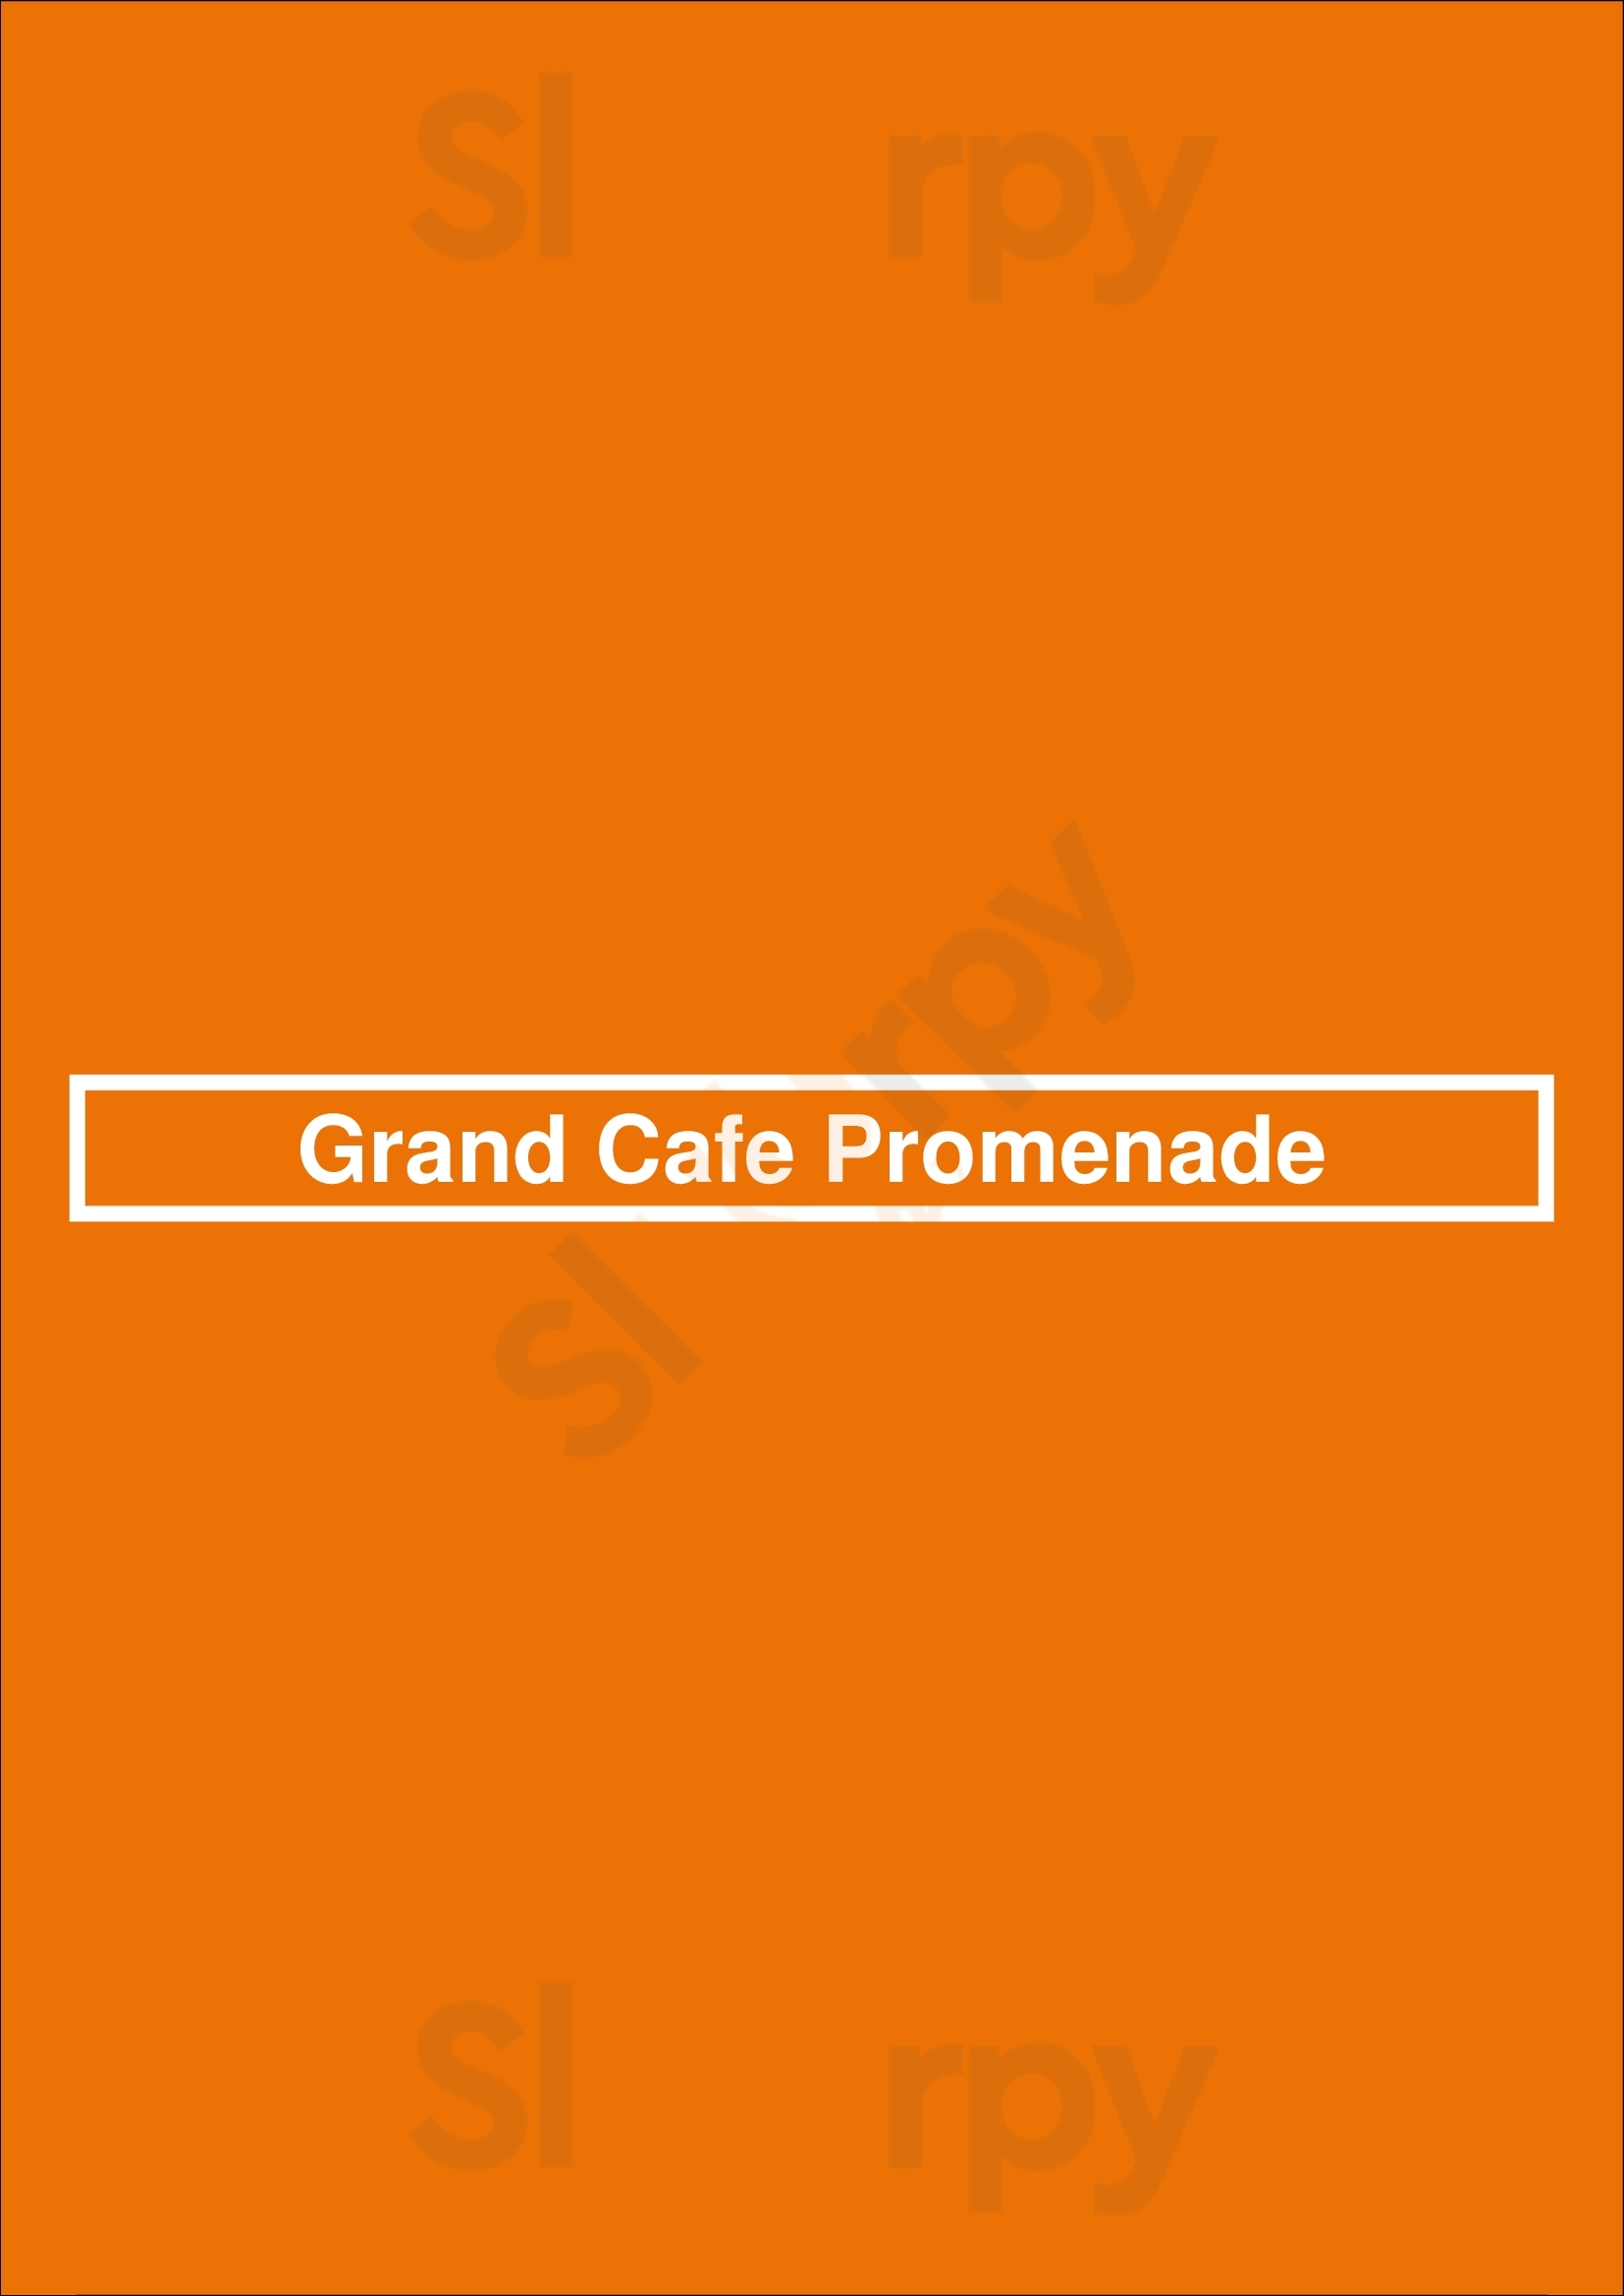 Grand Cafe Promenade Harlingen Menu - 1